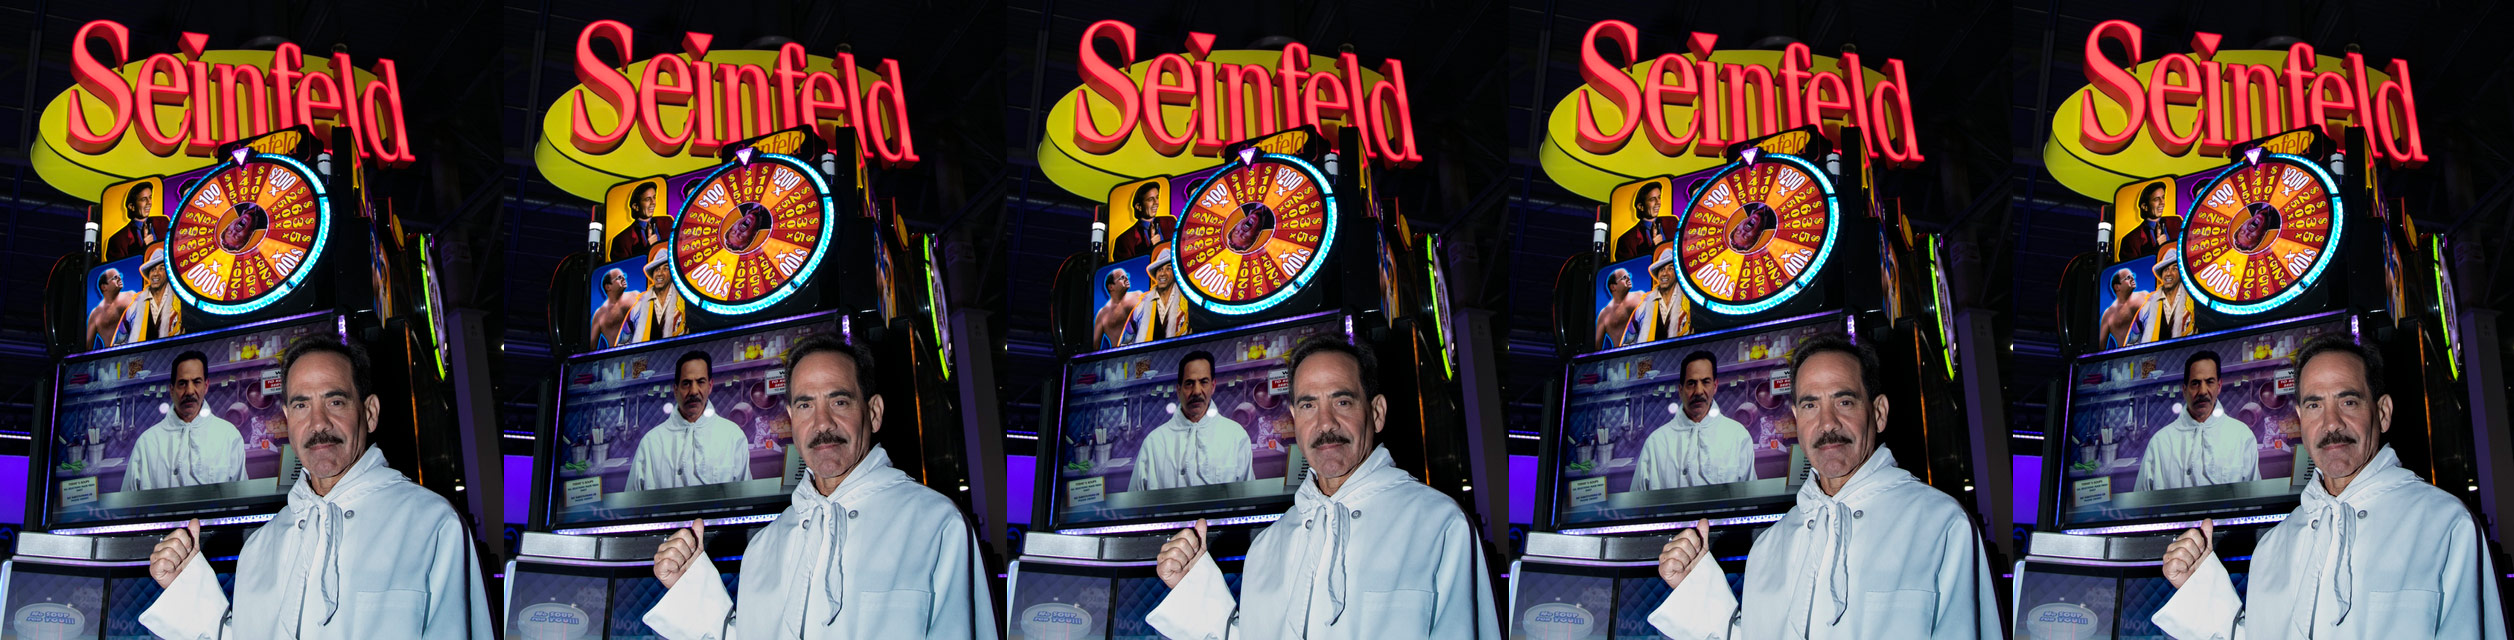 New path to stardom: promoting Las Vegas slot machines